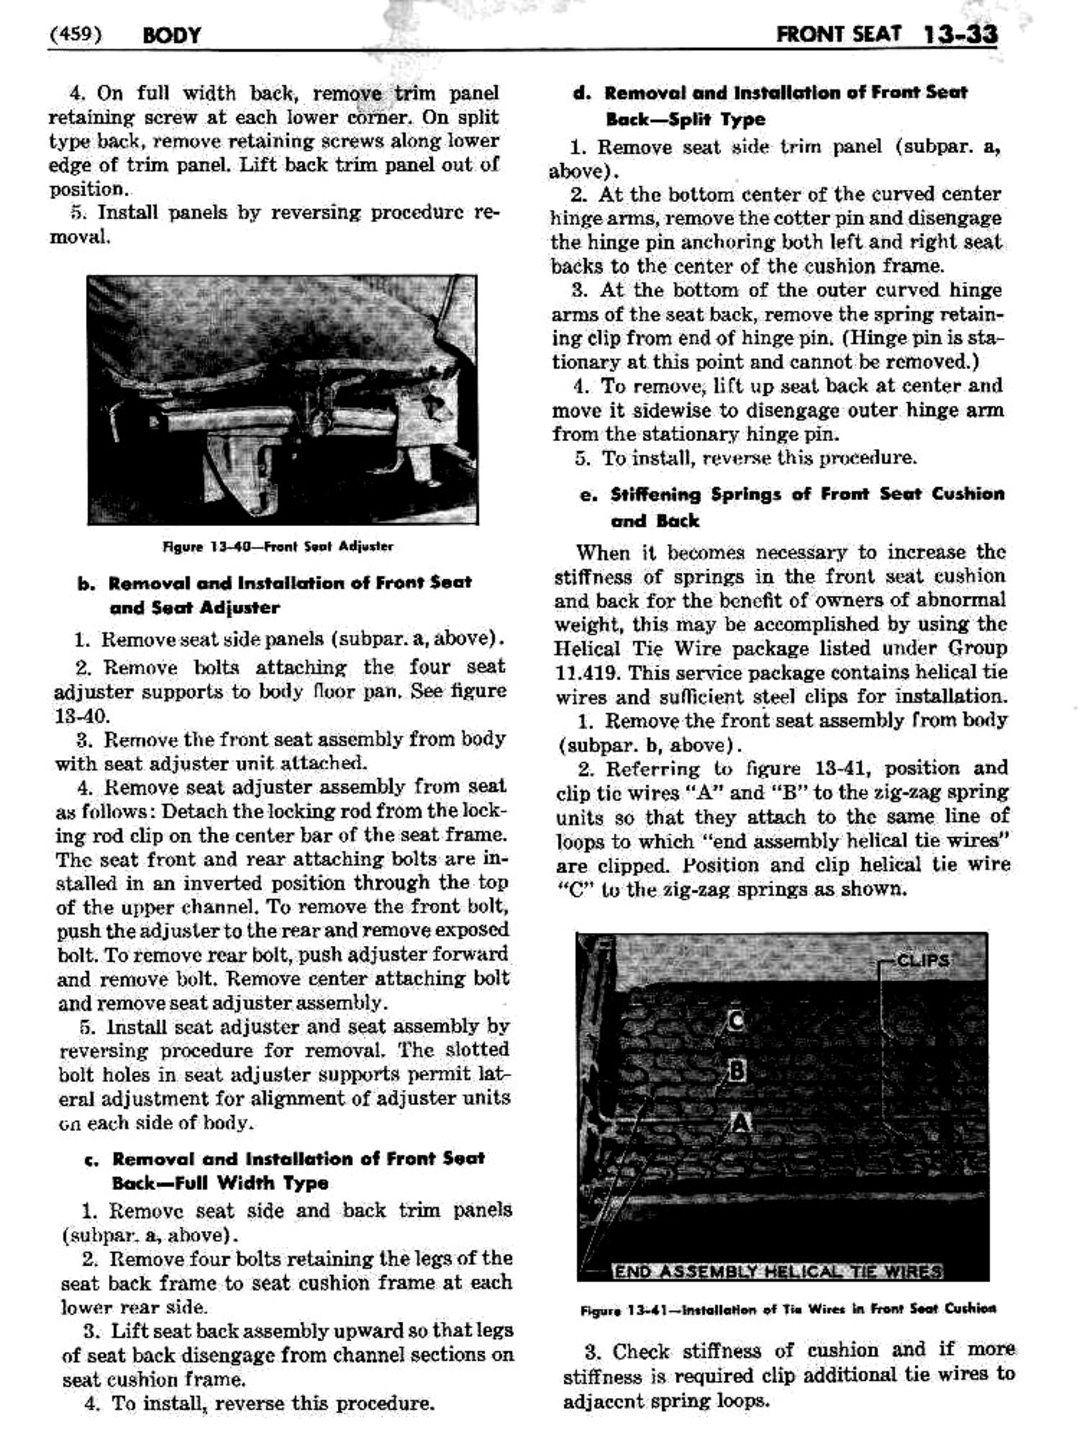 n_14 1951 Buick Shop Manual - Body-033-033.jpg